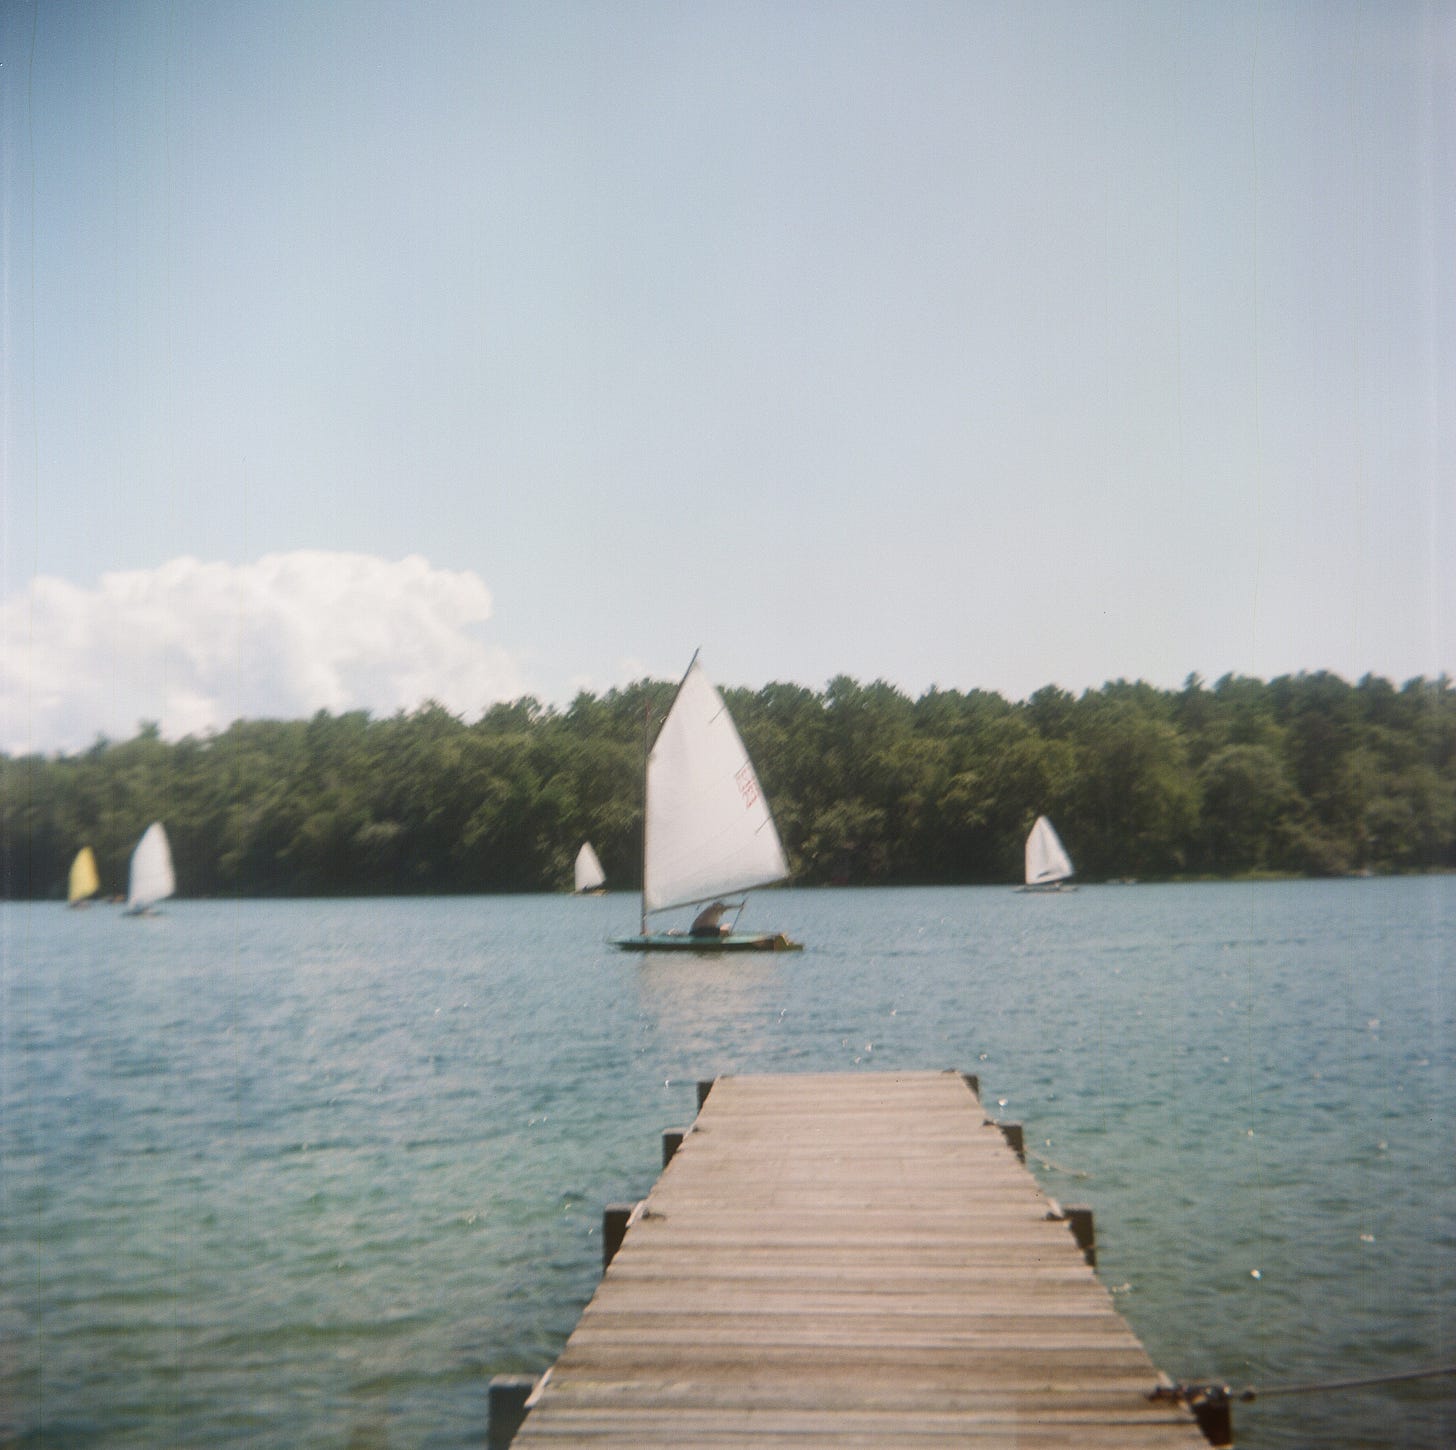 A sailboat on a pond